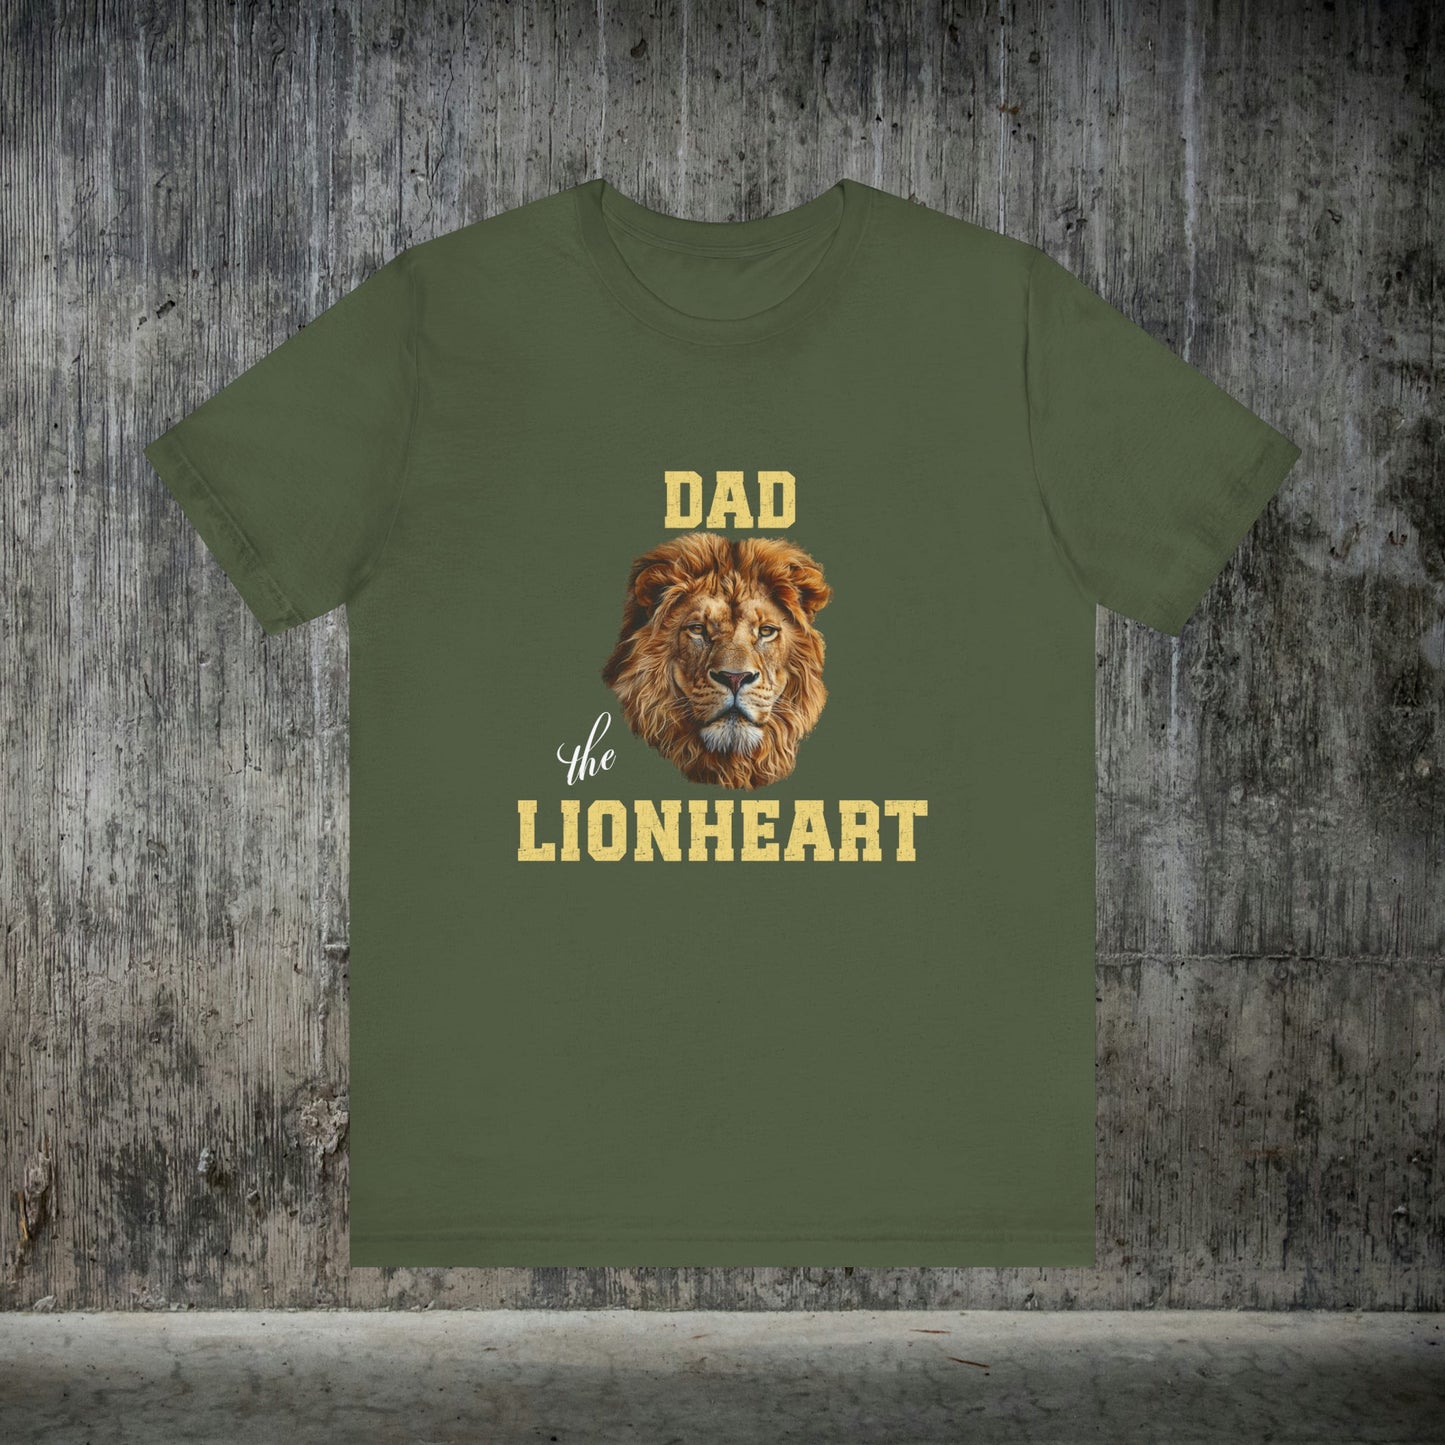 Great Dad T-shirt, Unique Cool Lion Head Braveheart Shirt, Brave Dad Shirt - FlooredByArt